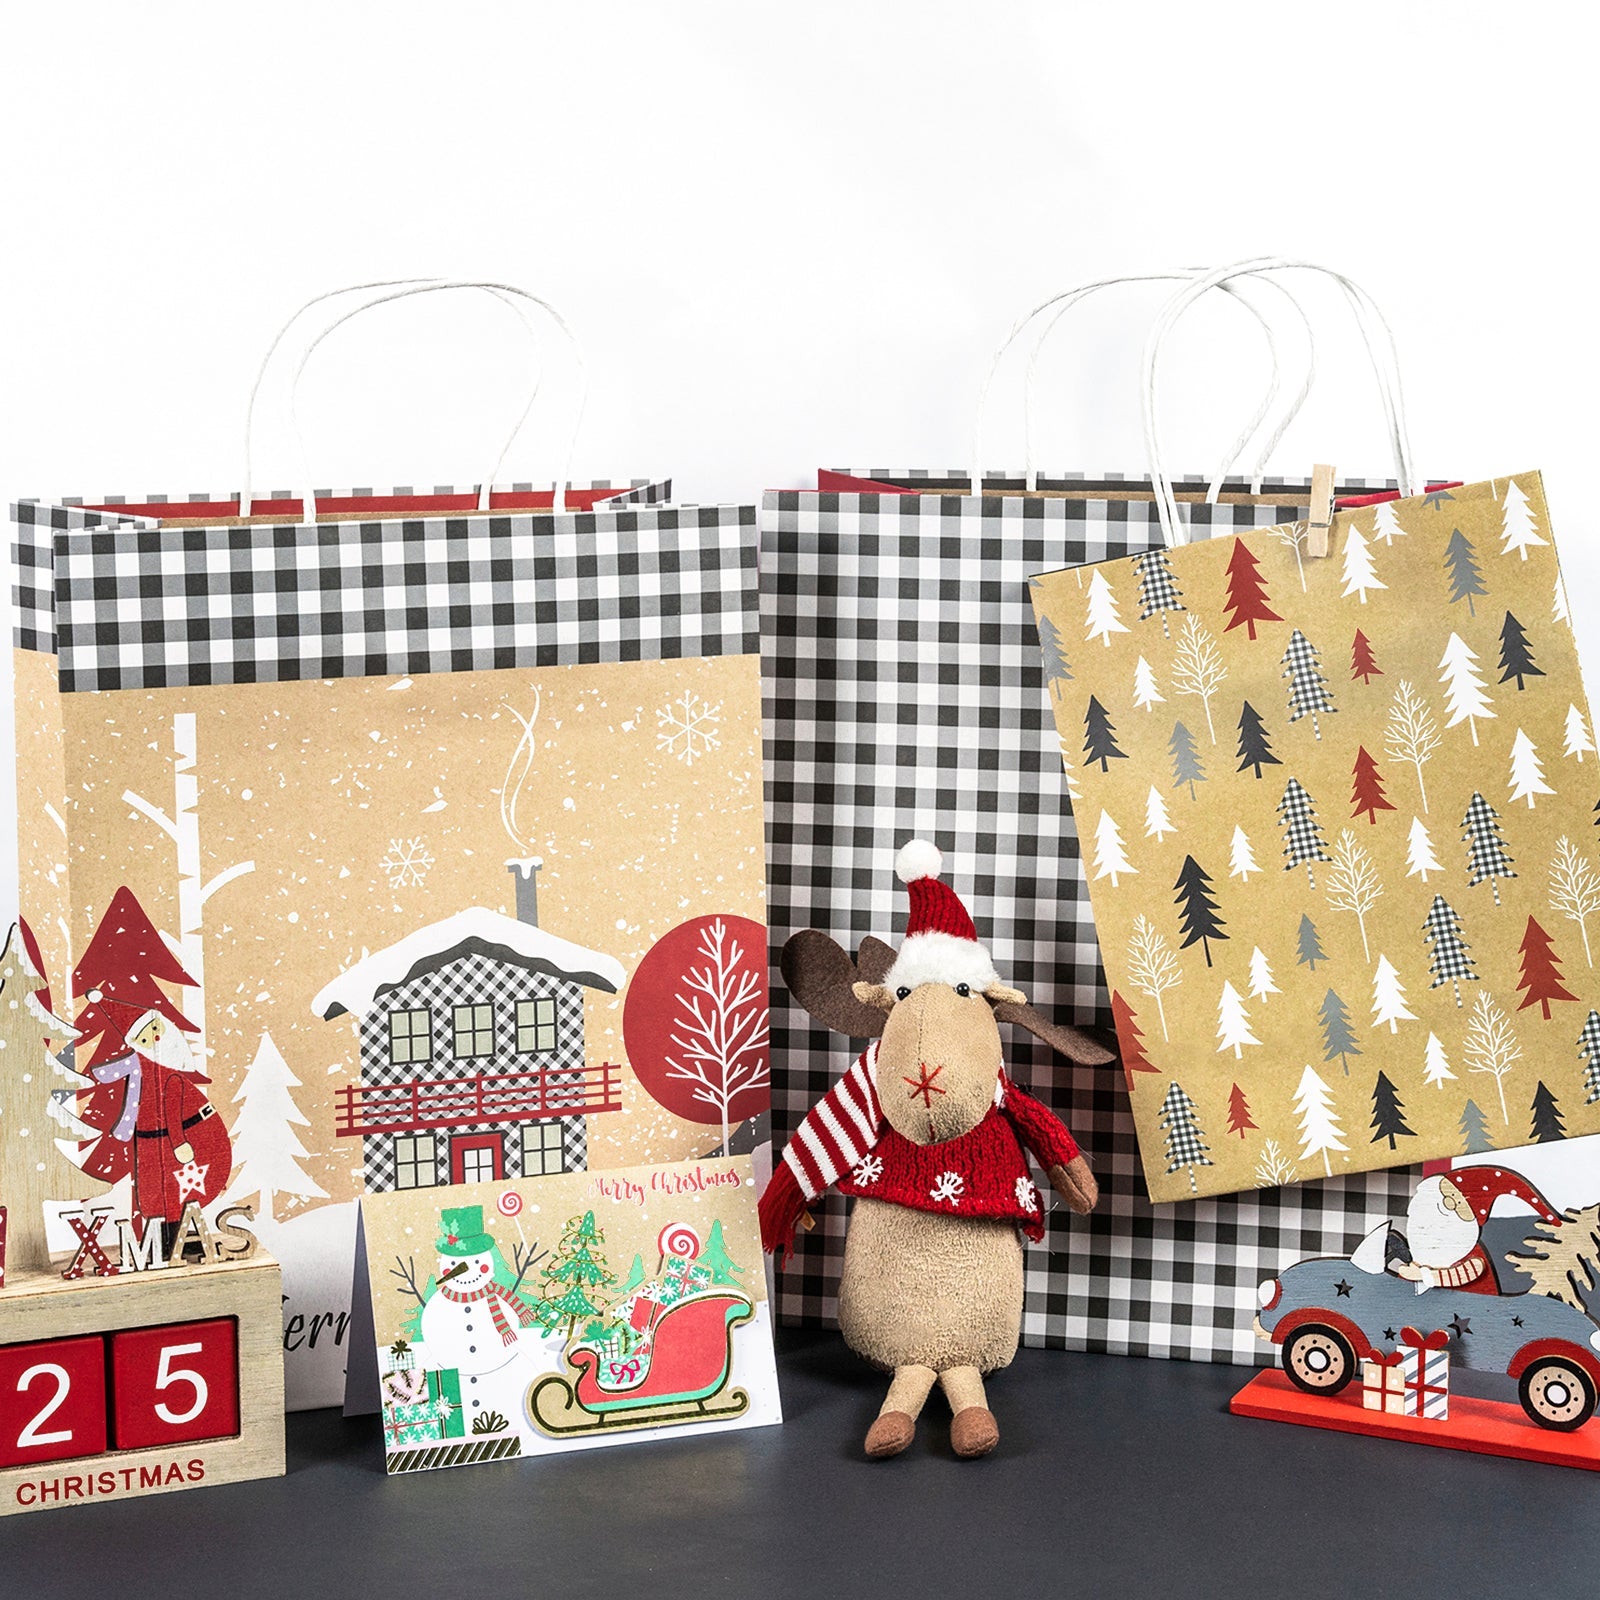 Assort Medium & Large Christmas Gift Bags - Deer/ Plaid/ Cabin/Christmas Tree- 8 Pack